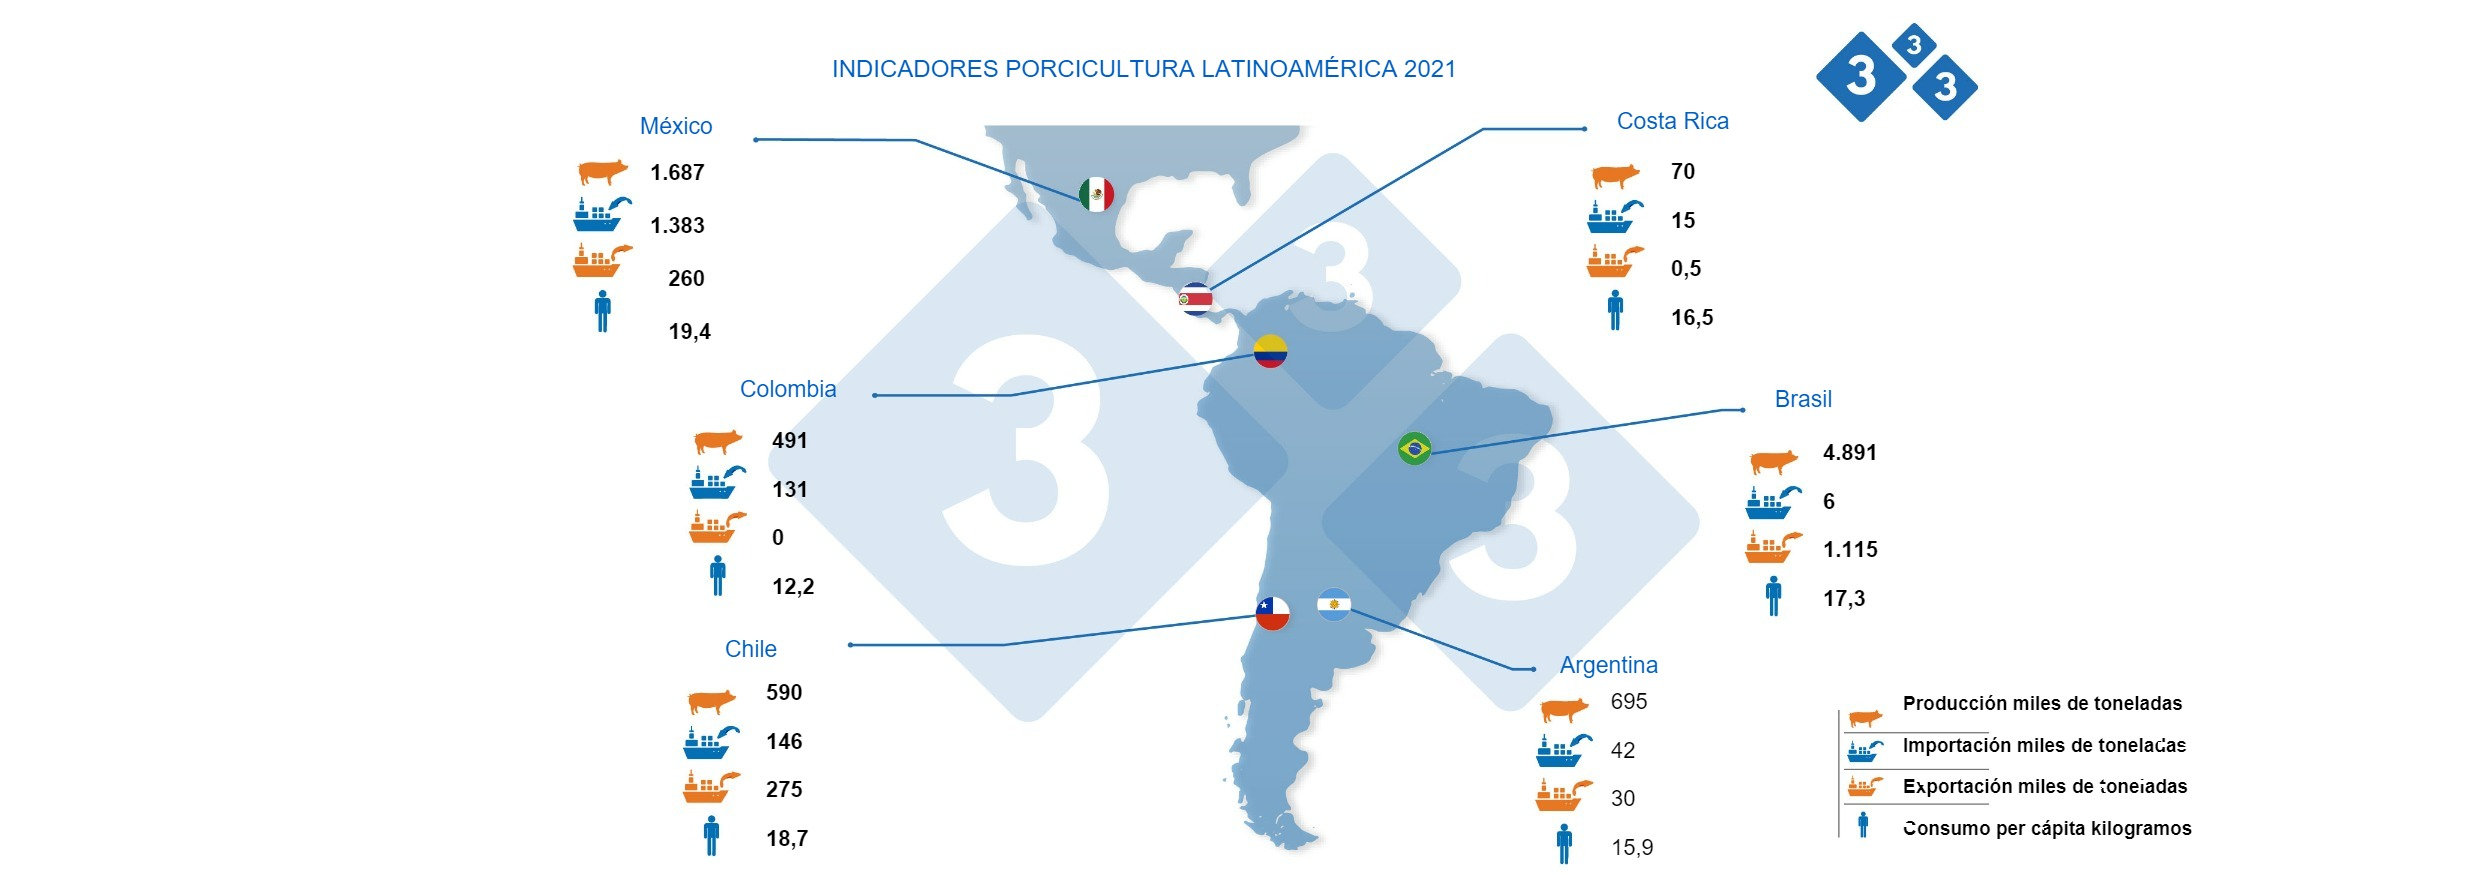 Principales indicadores para porcicultura en Latinoam&eacute;rica 2021
